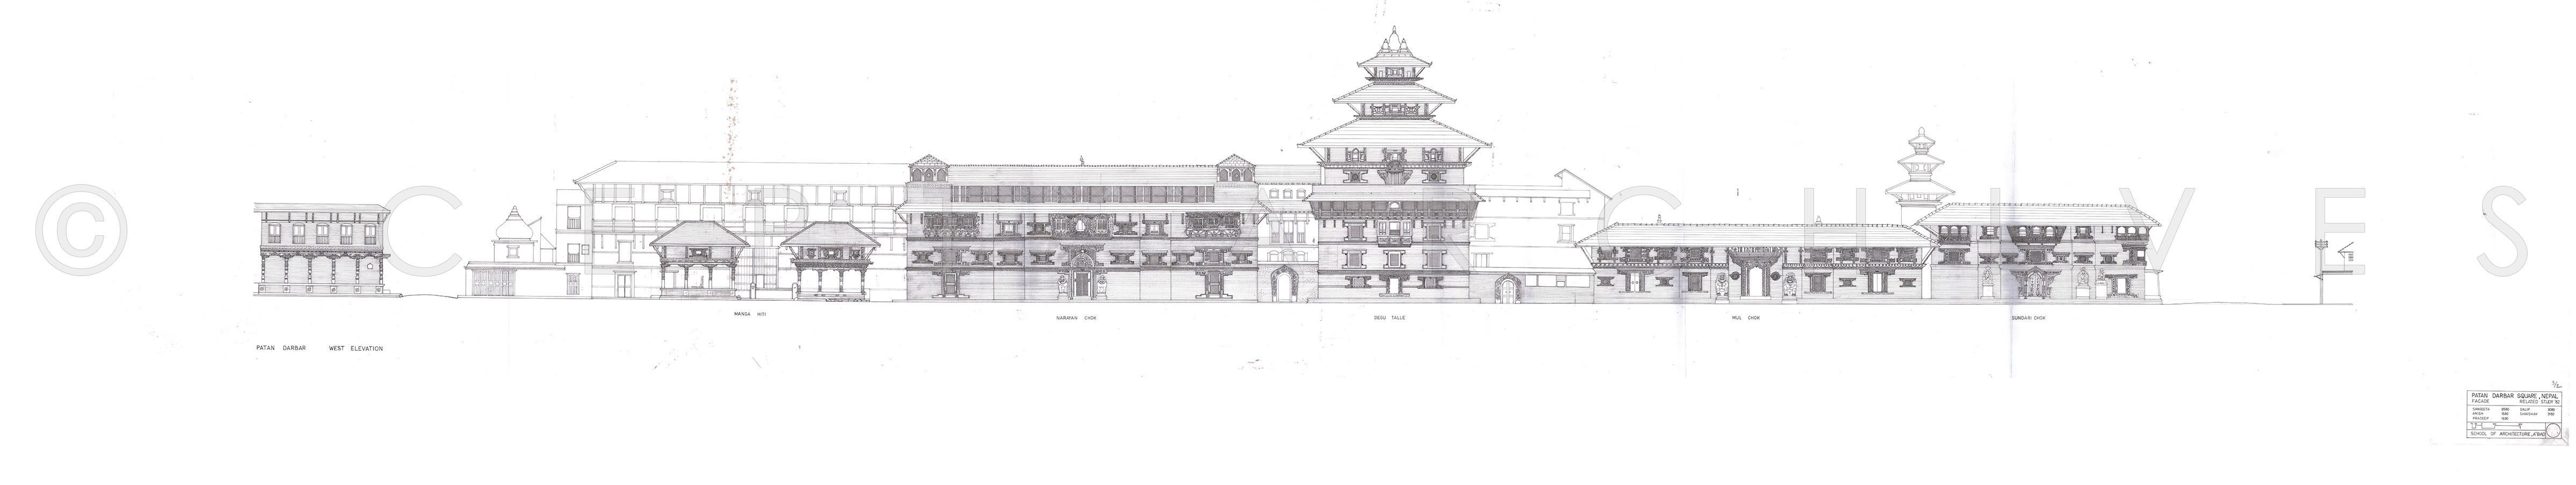 Patan Darbar Square